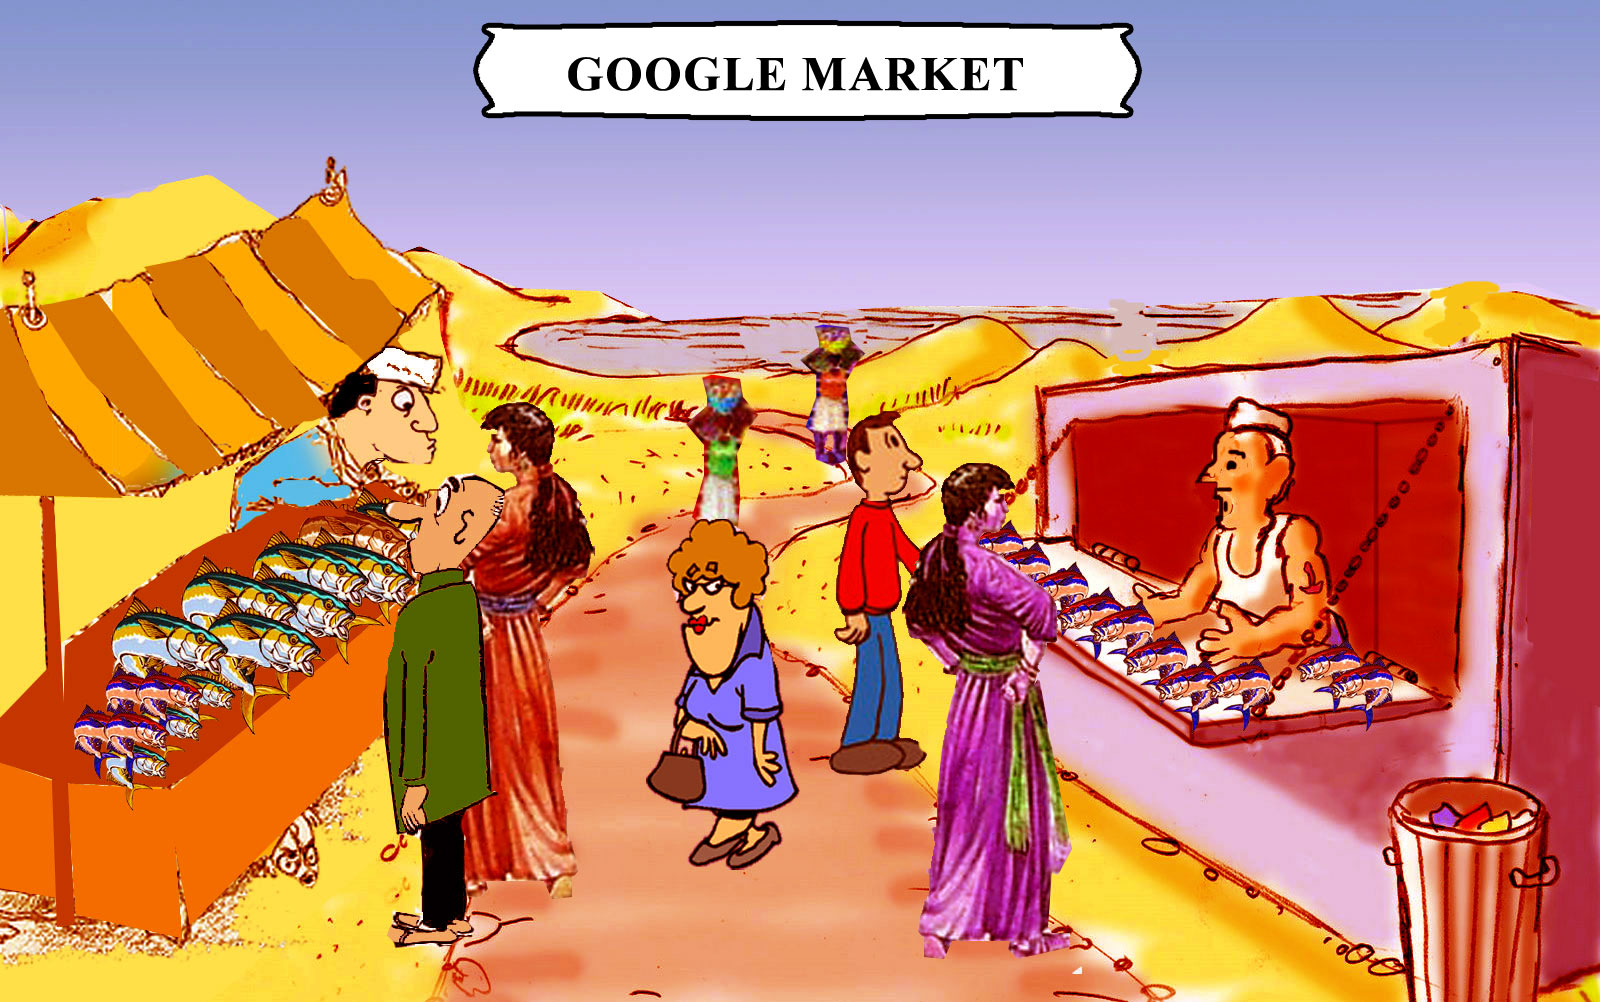 Google market